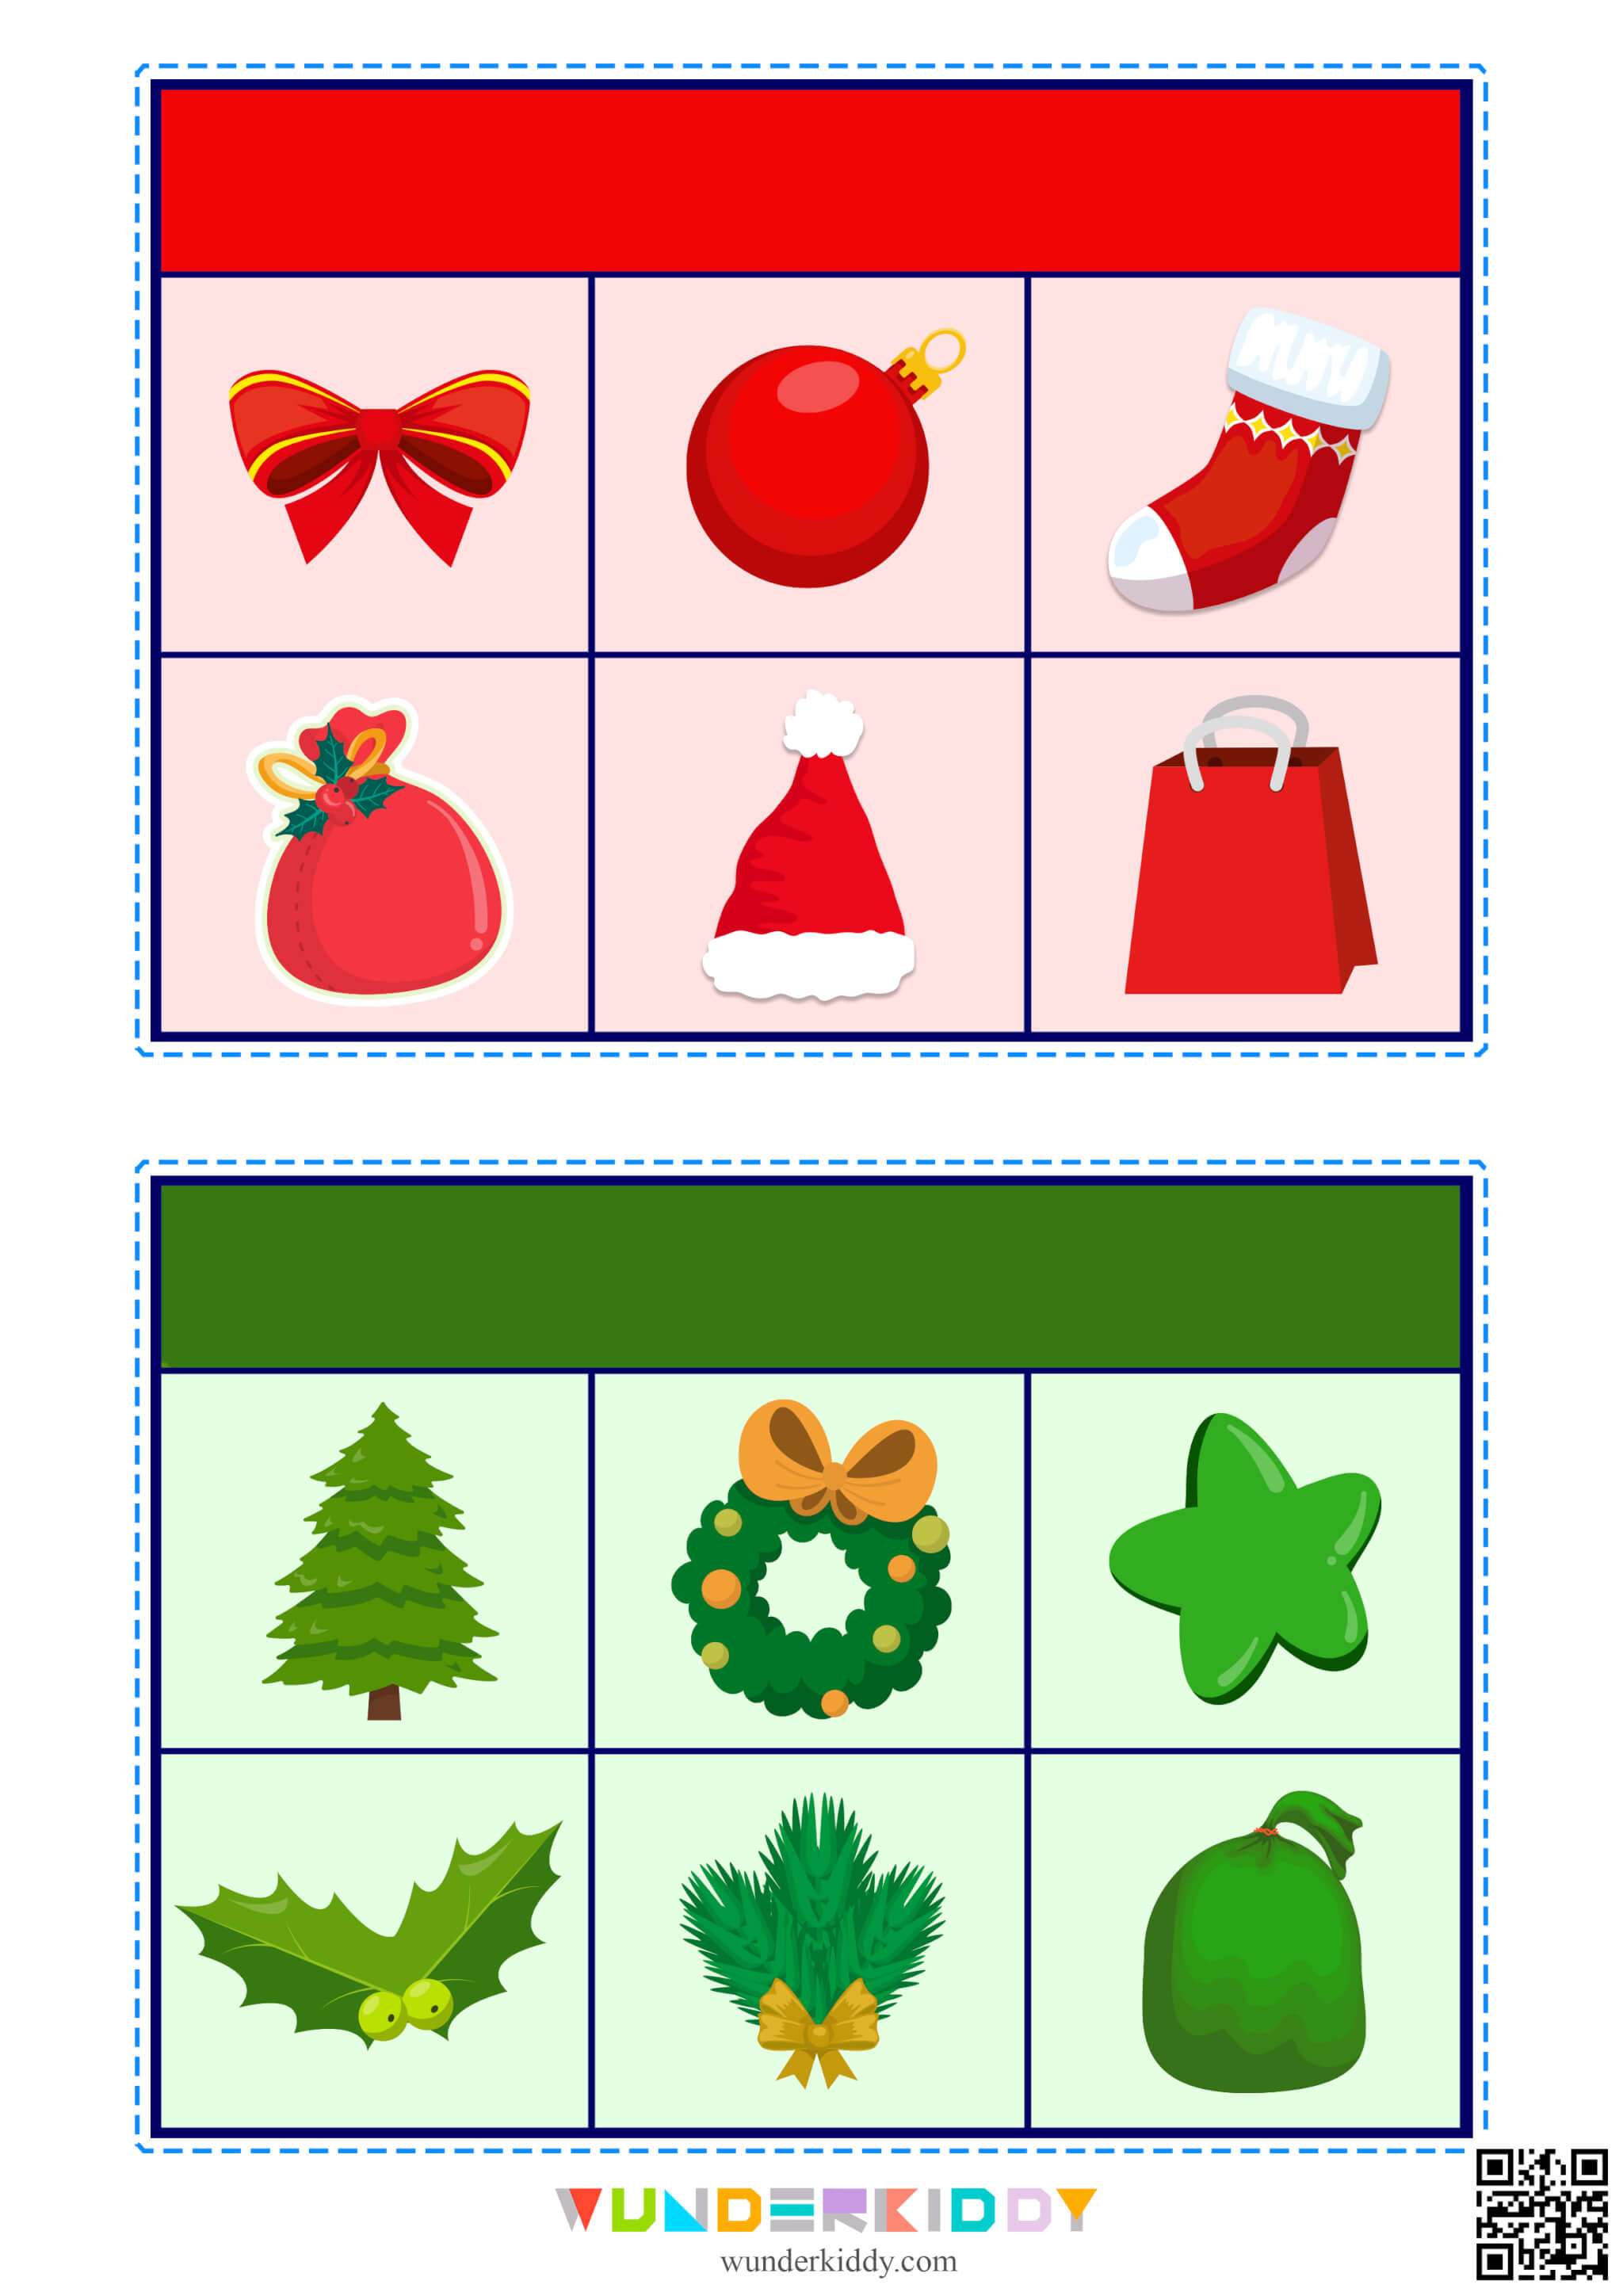 Worksheet Christmas Color Sorting - Image 2